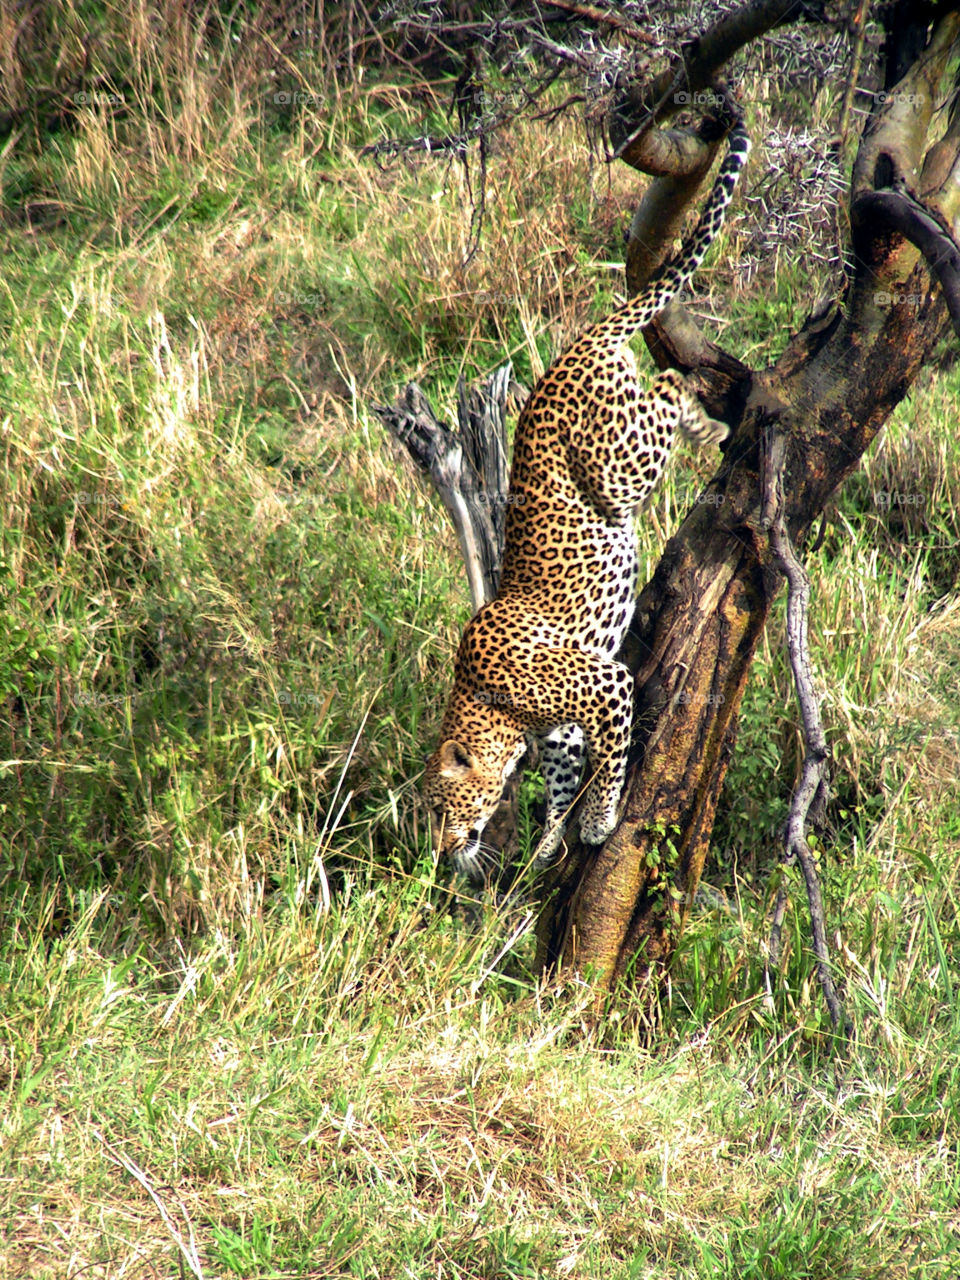 Leopard climbing down a tree, Serengeti national park, Tanzania